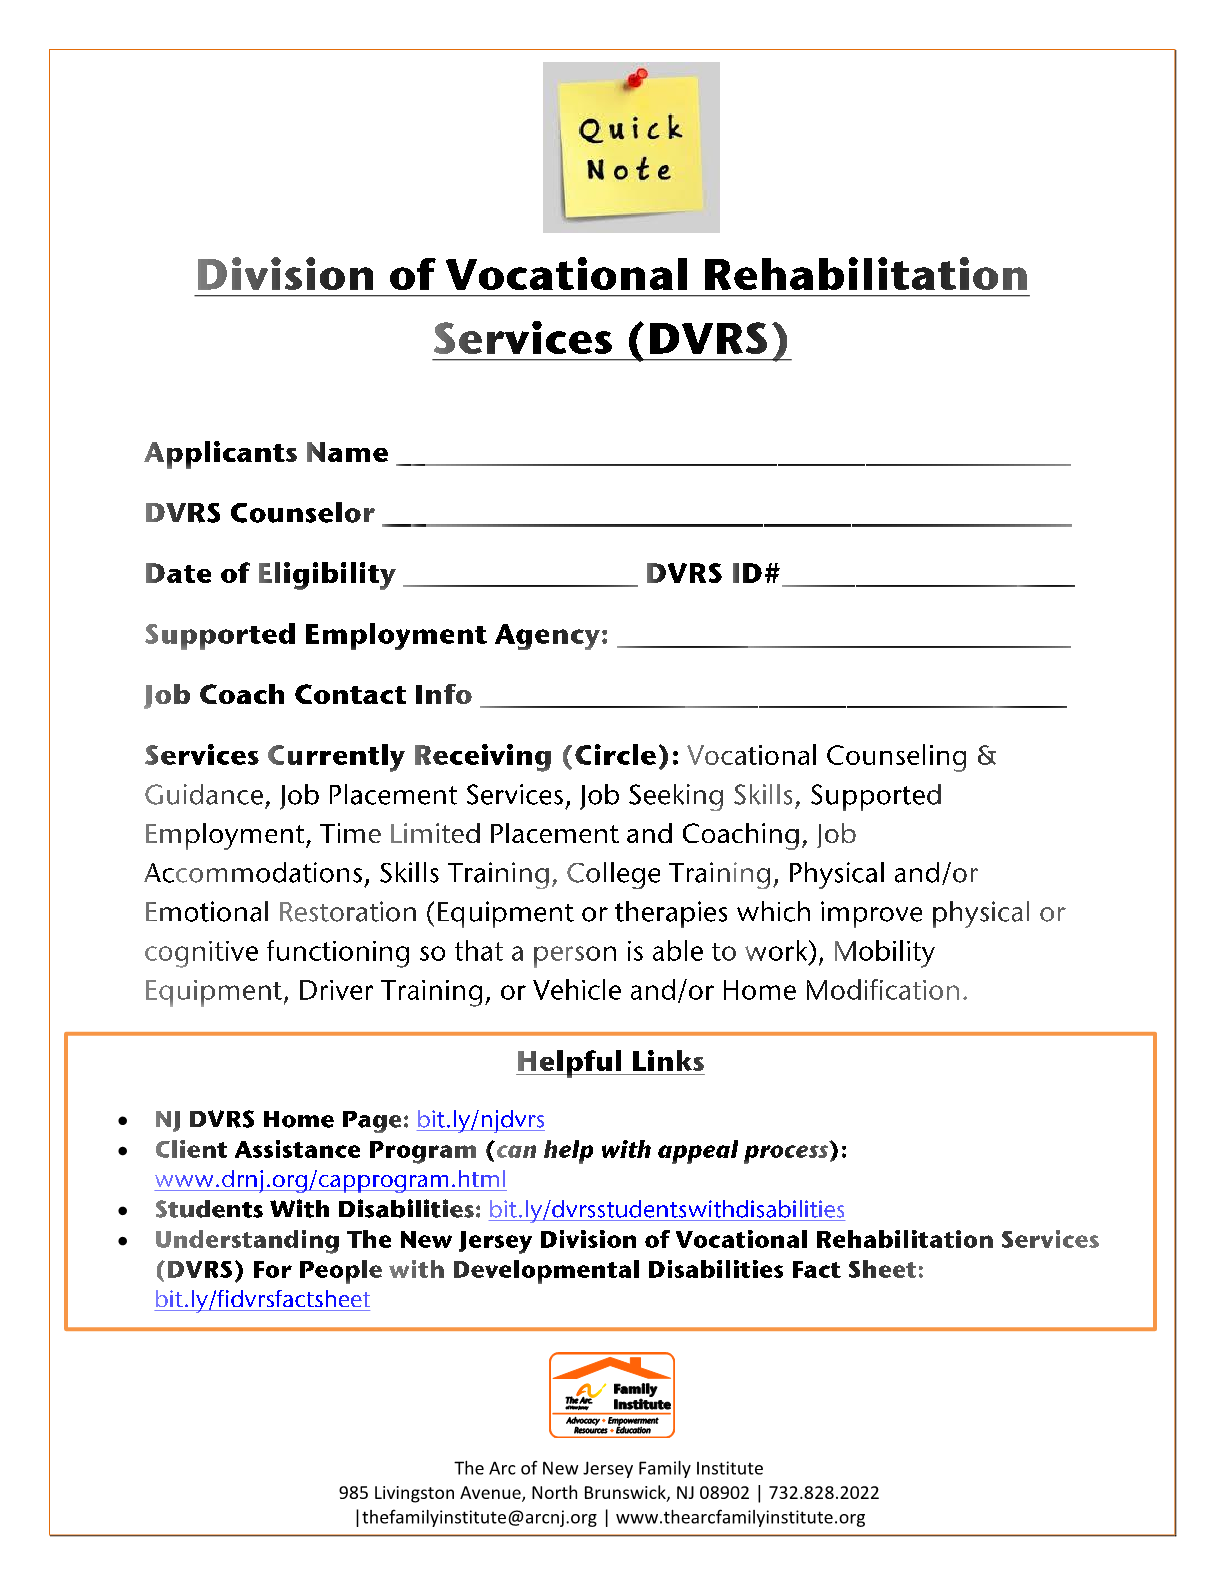 Division of Vocational Rehabilitation Services (DVRS)